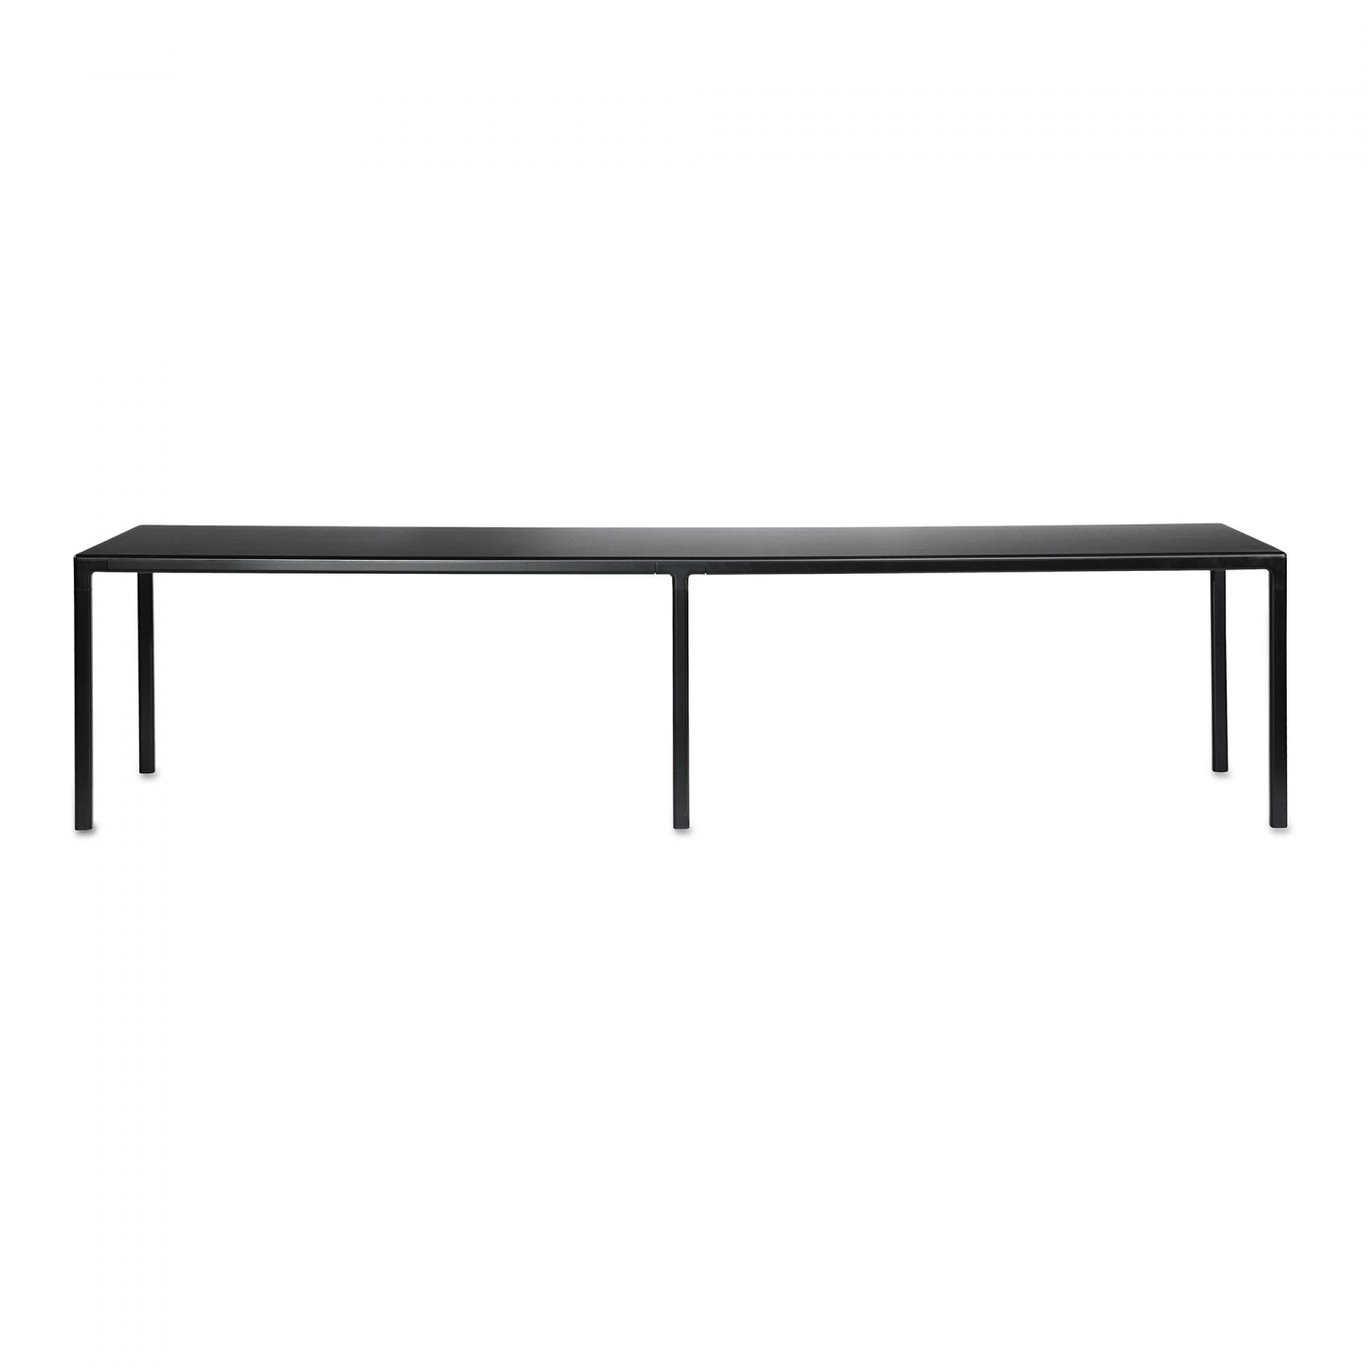 T12 Table 120x320 cm, Black